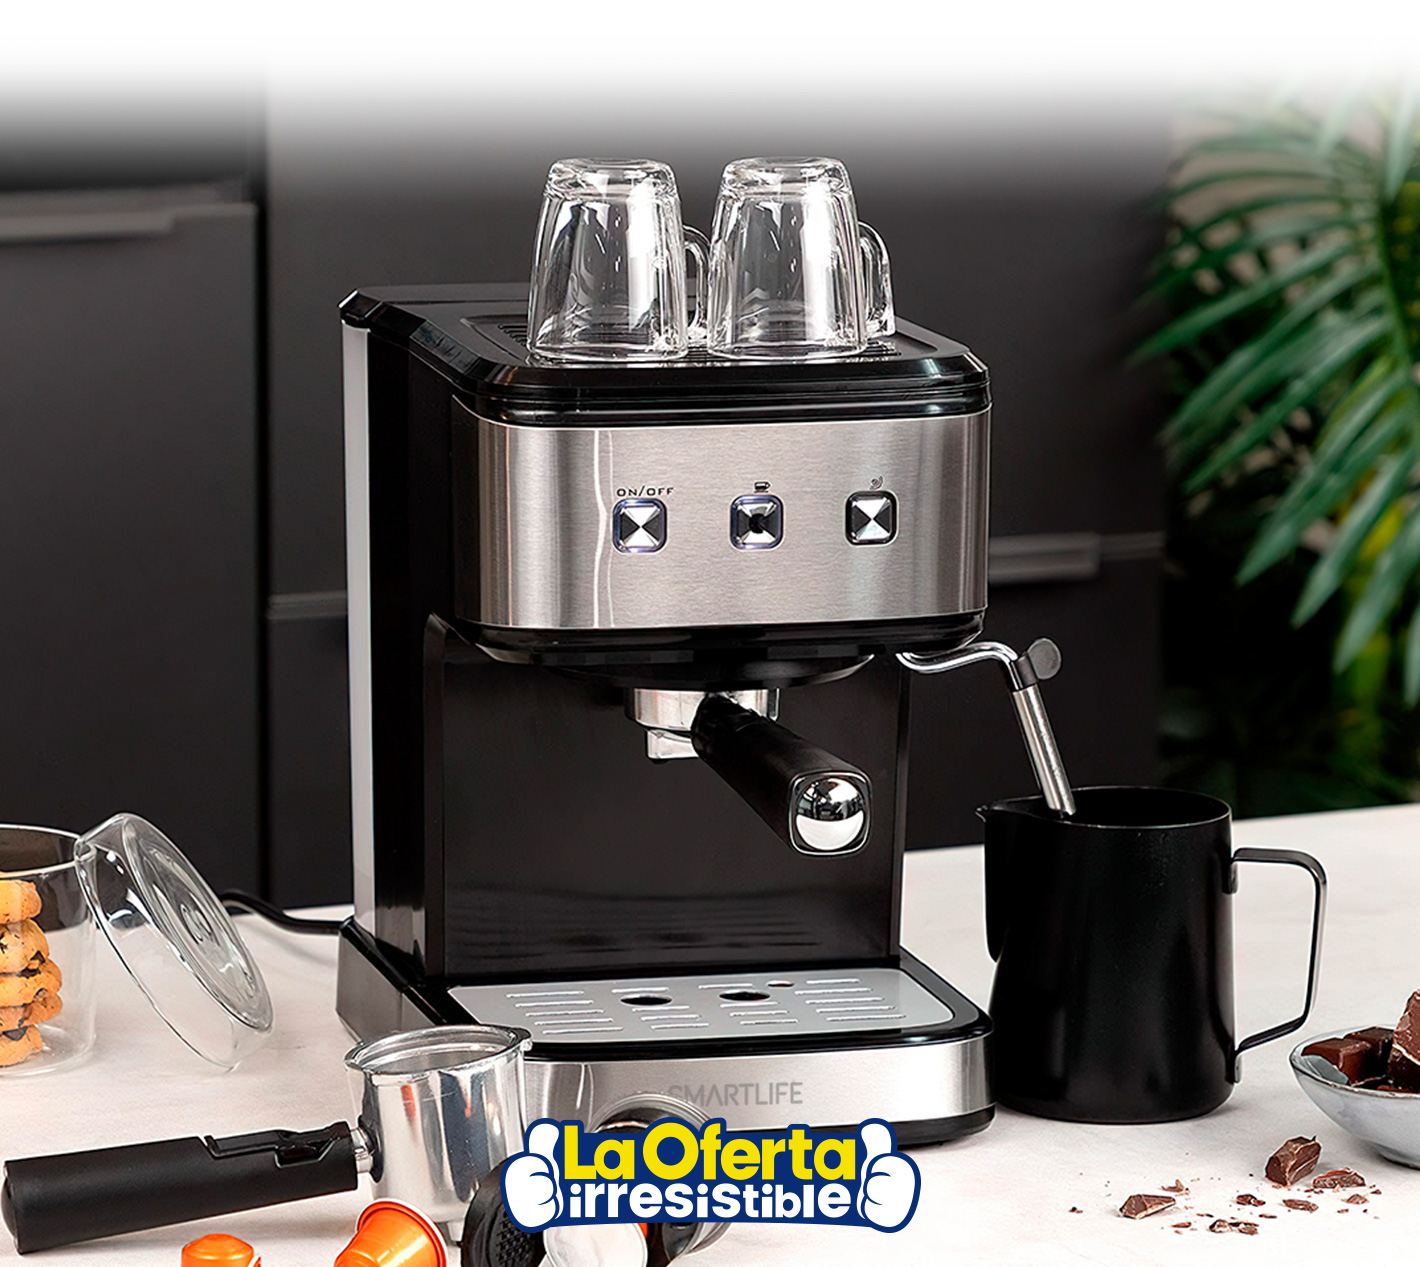 Cafetera Espresso SMARTLIFE 800W Jarra de Vidrio 240ml, oferta LOi.